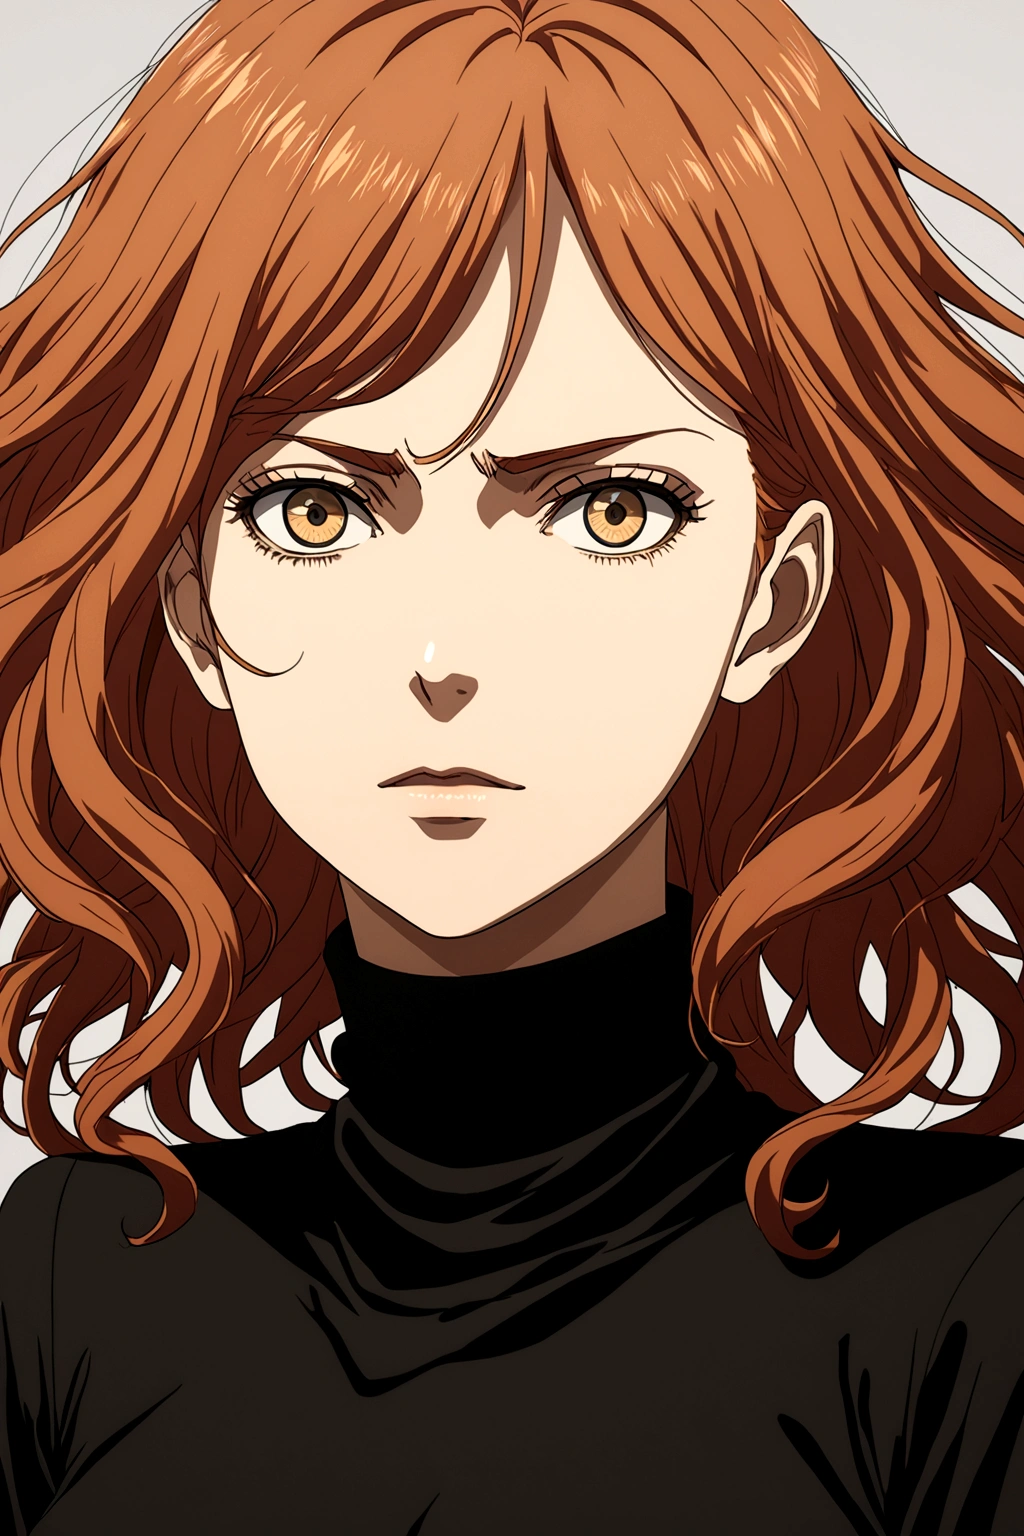 ataque al estilo anime titan, mujer con cabello ondulado pelirrojo. Lleva una blusa negra de cuello alto.